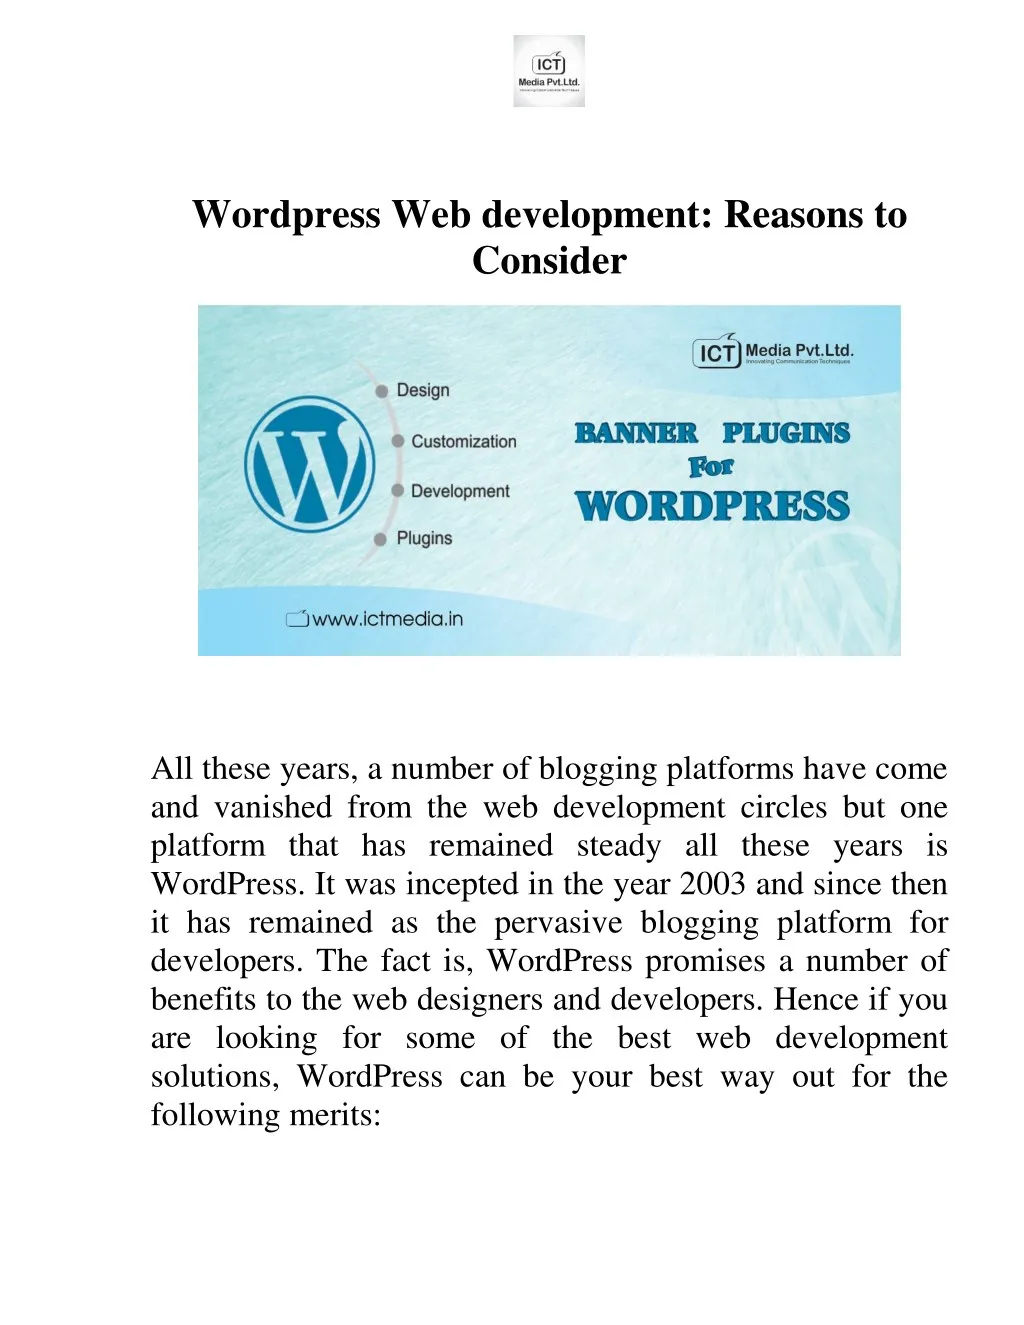 wordpress web development reasons to consider